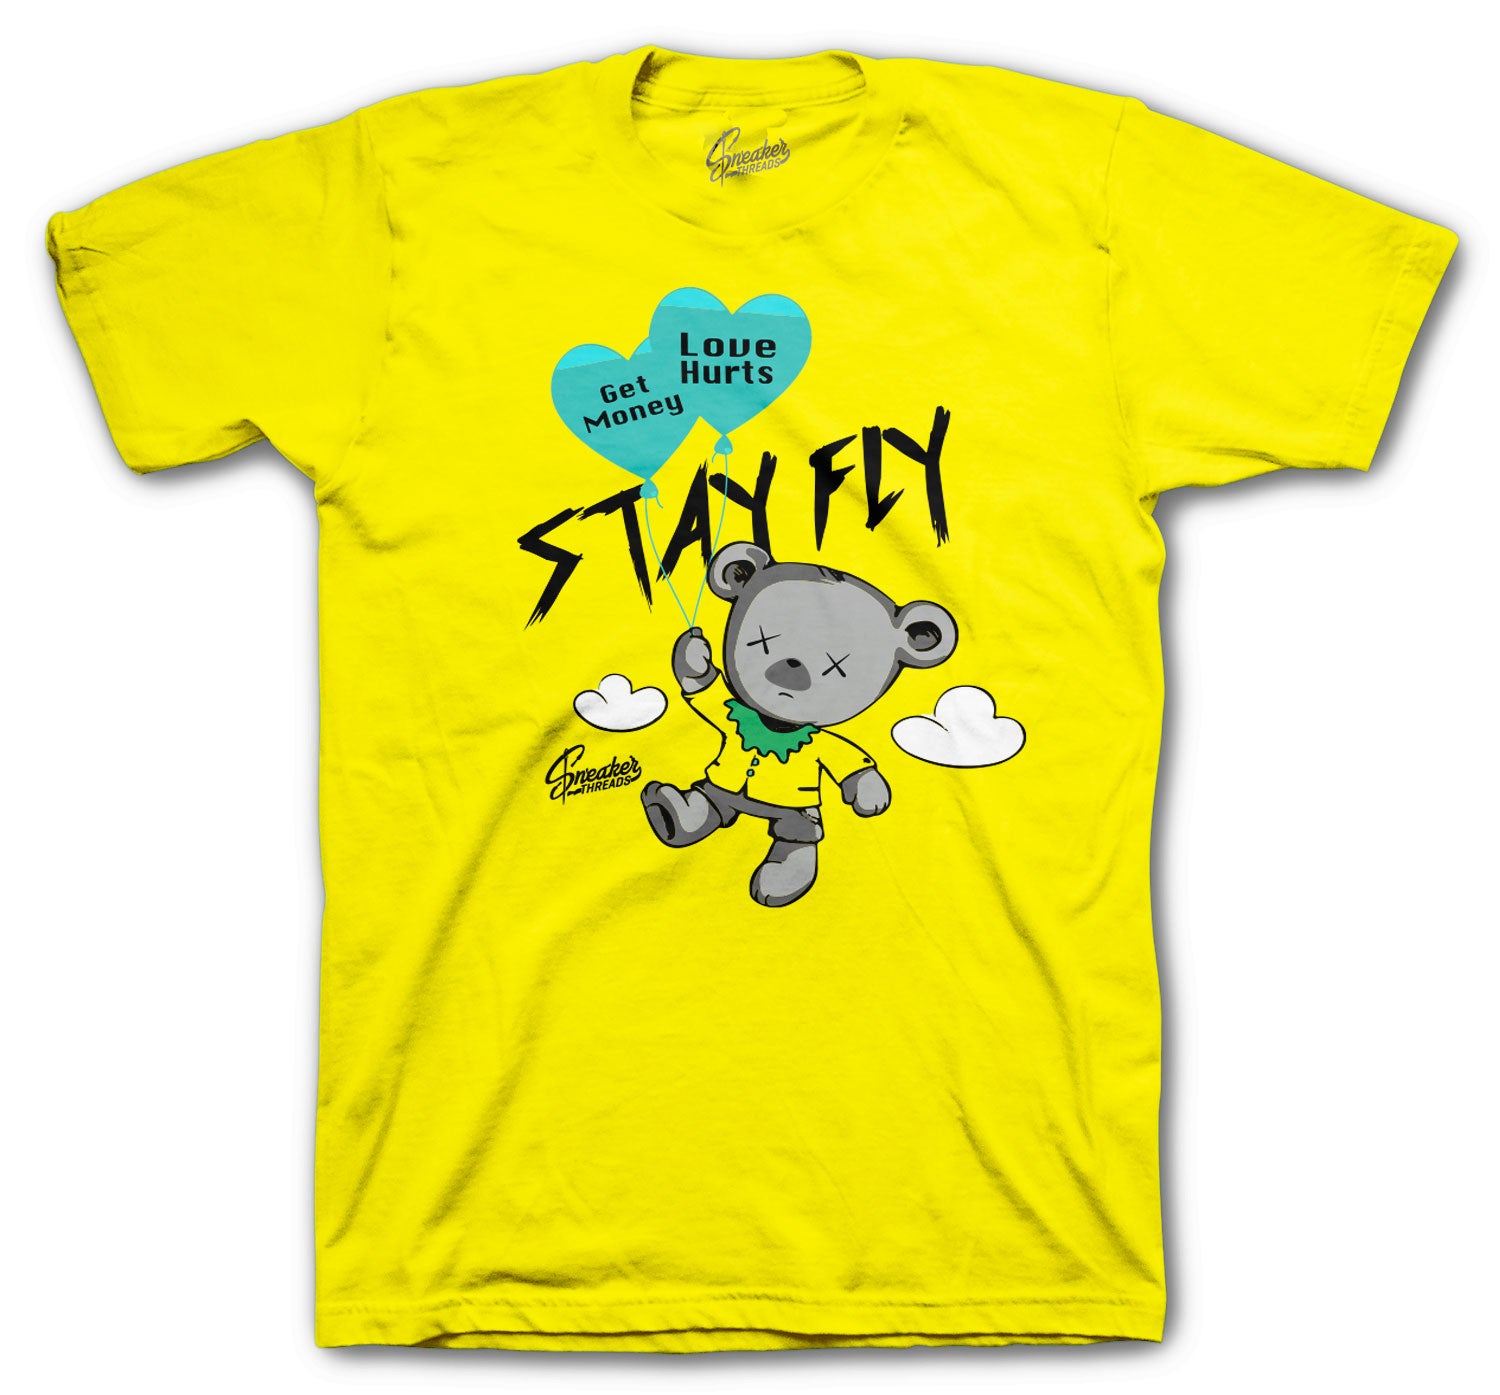 Dunk SB Grateful Shirt - Money Over Love - Yellow